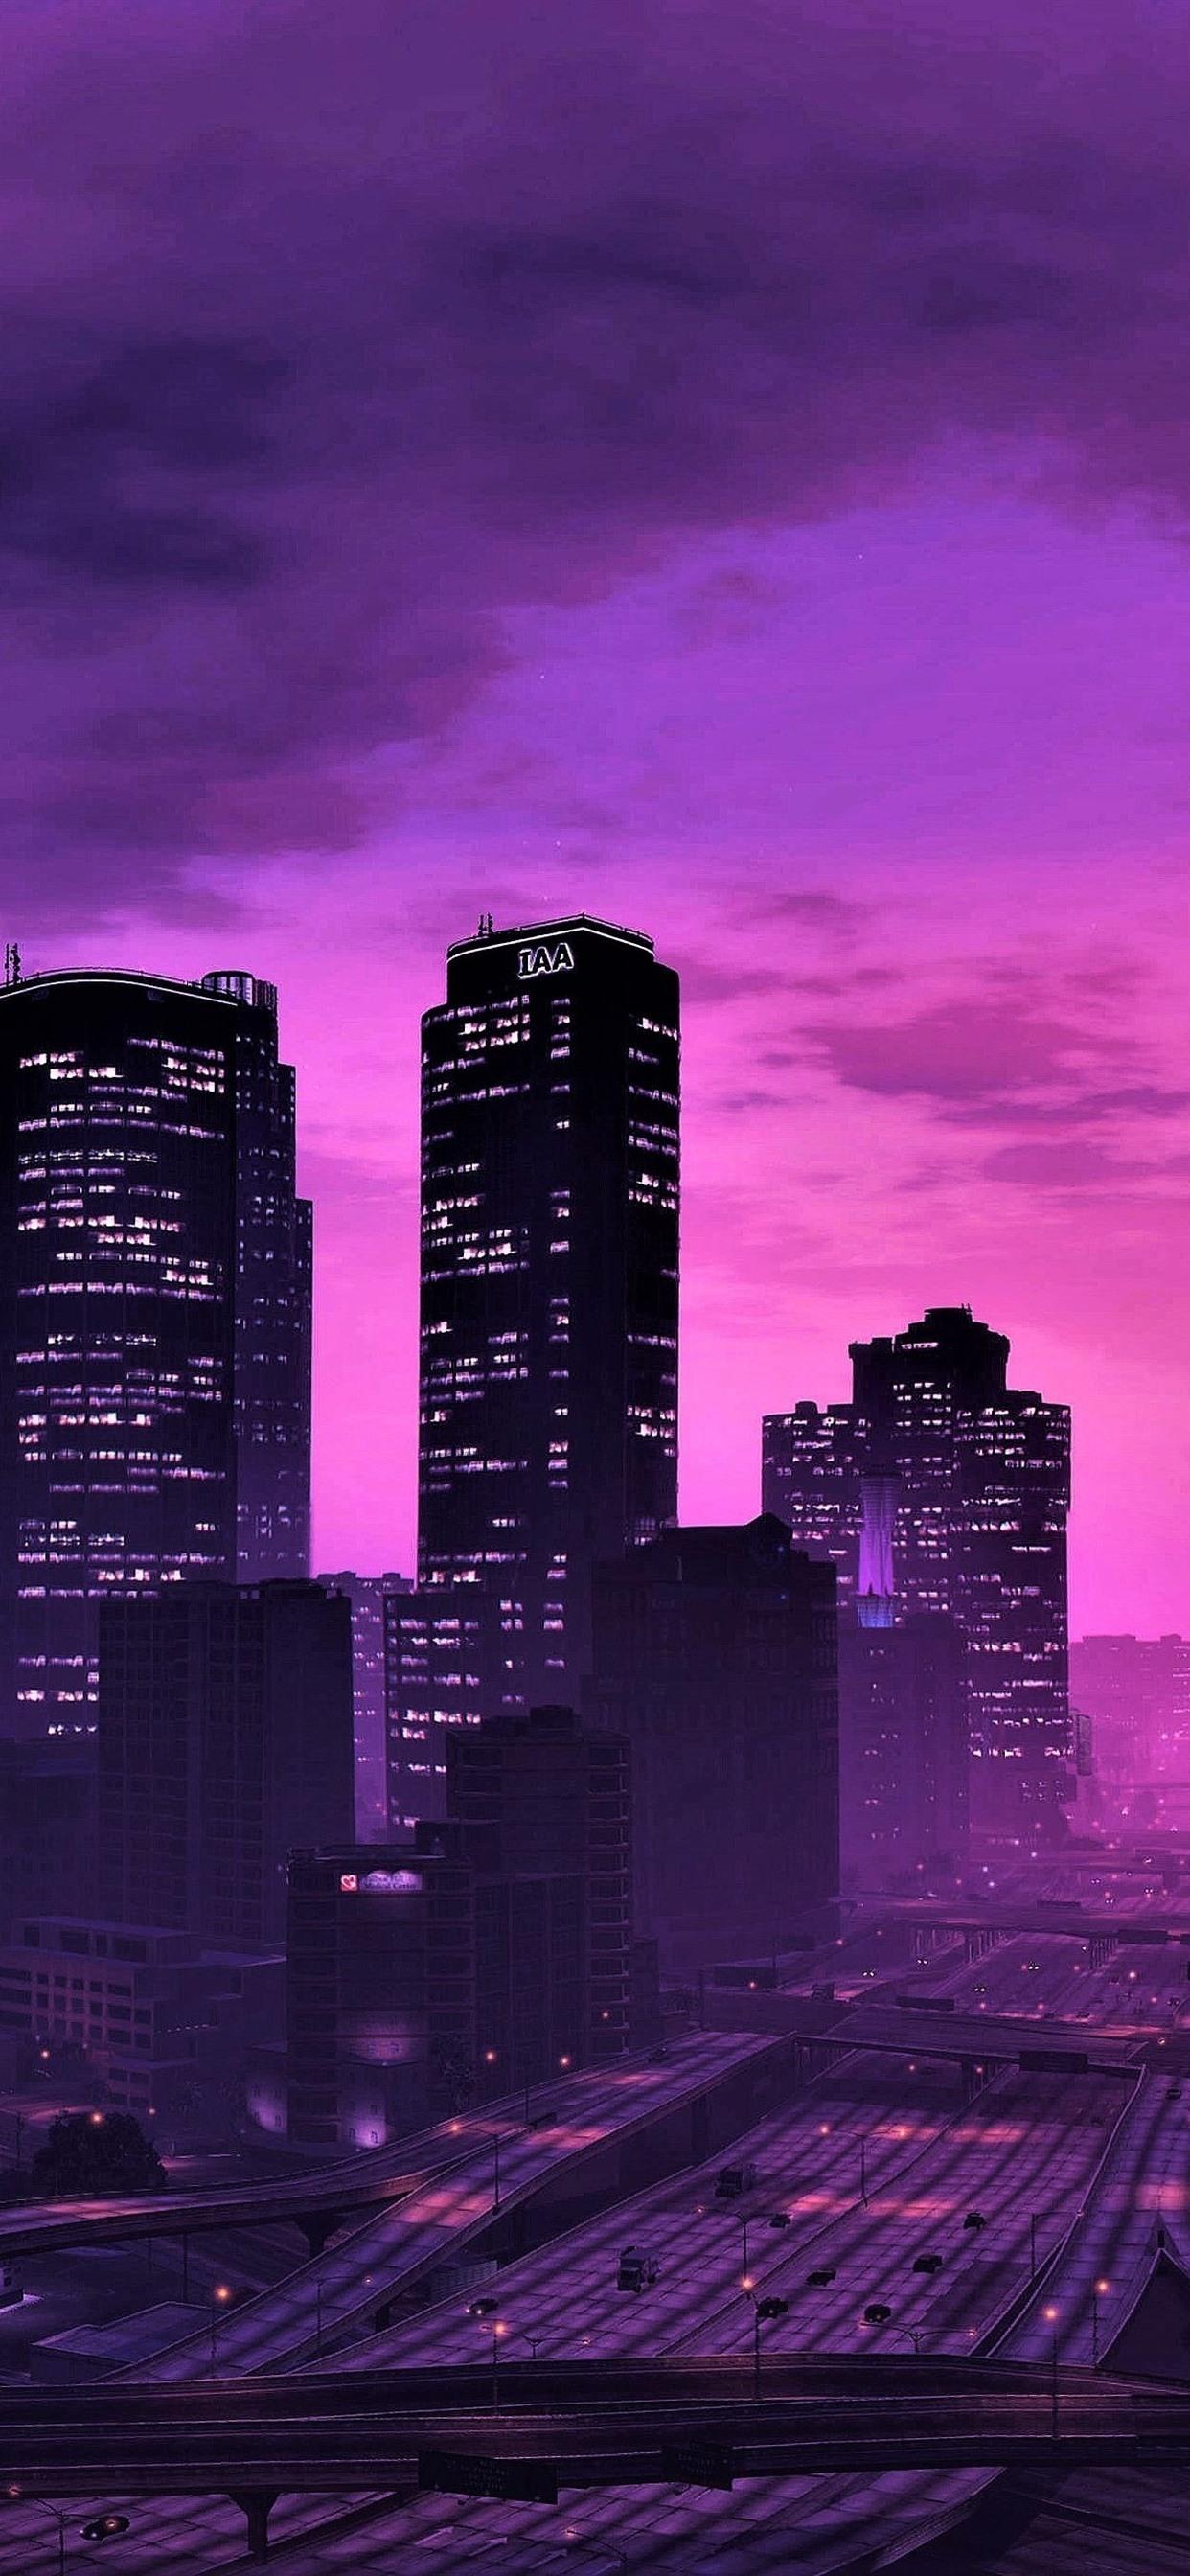 GTA city at night, purple style, skyscrapers 1242x2688 iPhone